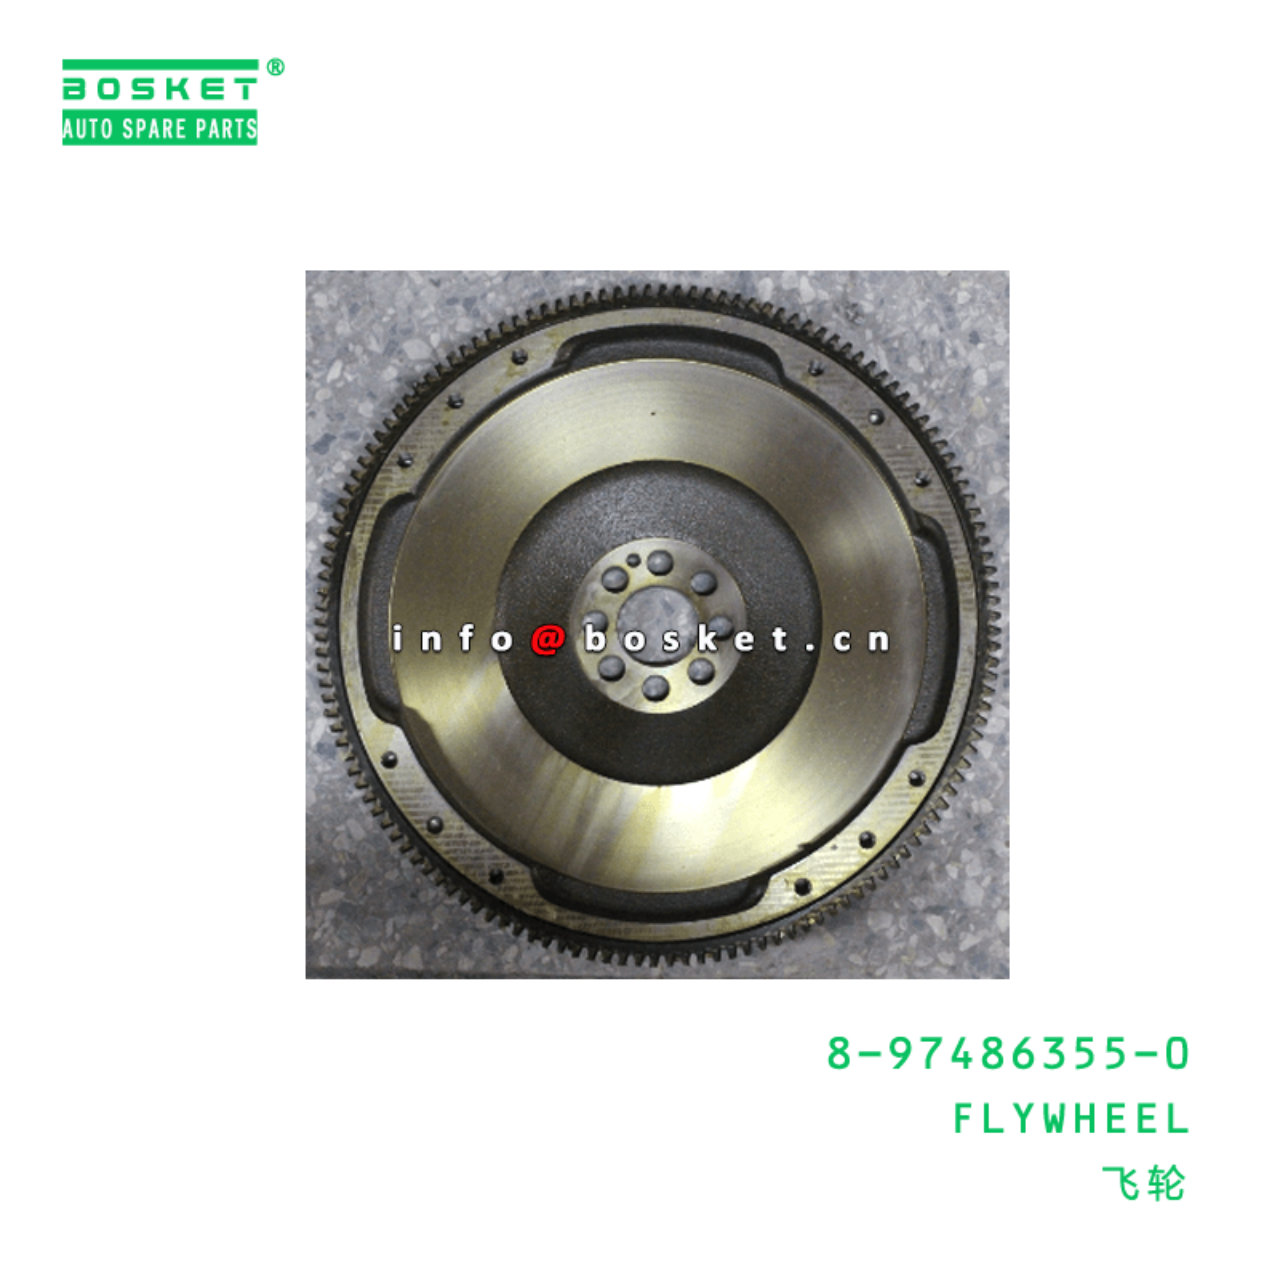 8-97486355-0 Flywheel 8974863550 Suitable for ISUZU NPR - For 